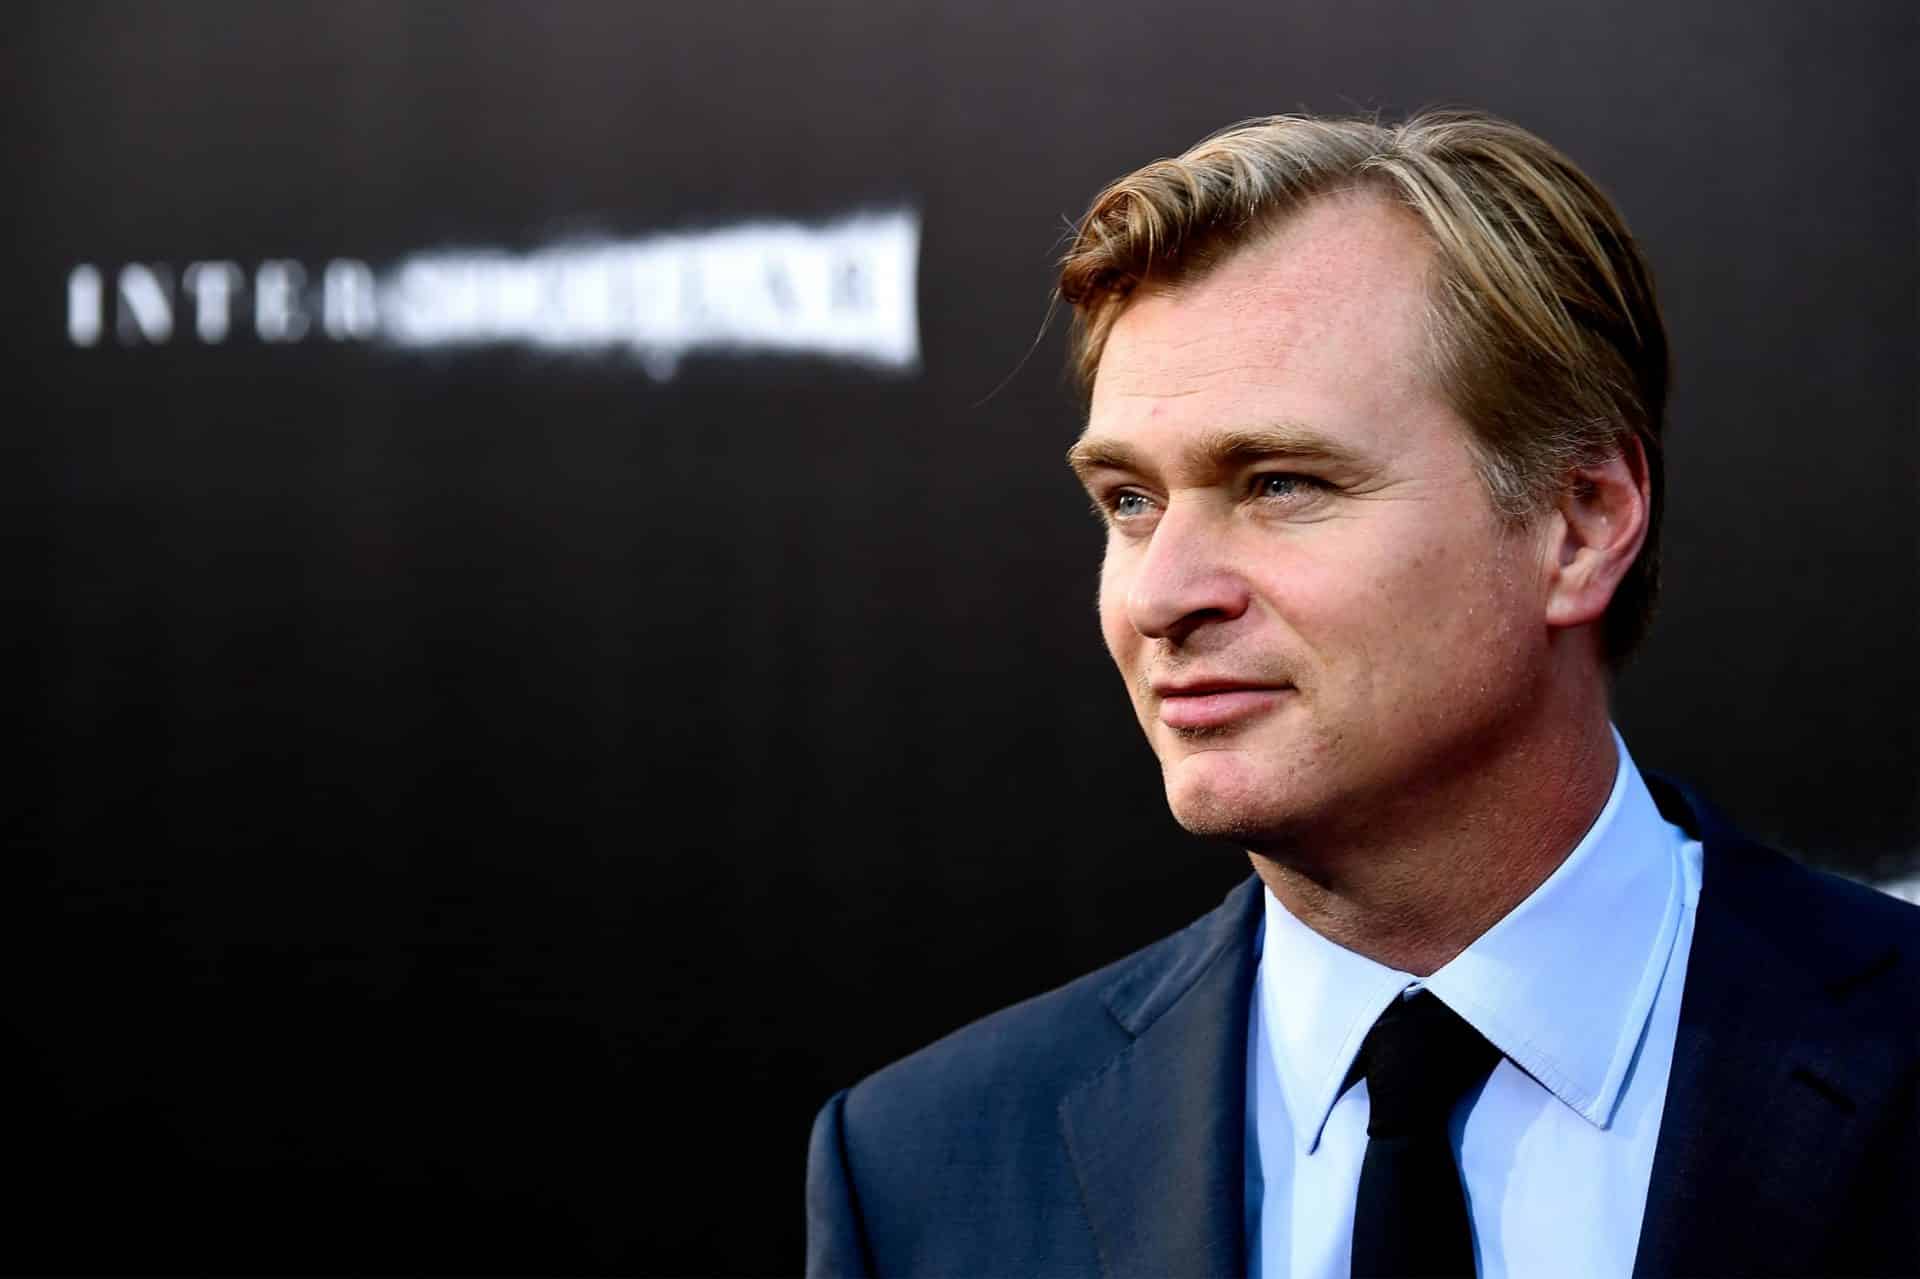 Oscar 2018: prima nomination come Miglior regista per Christopher Nolan